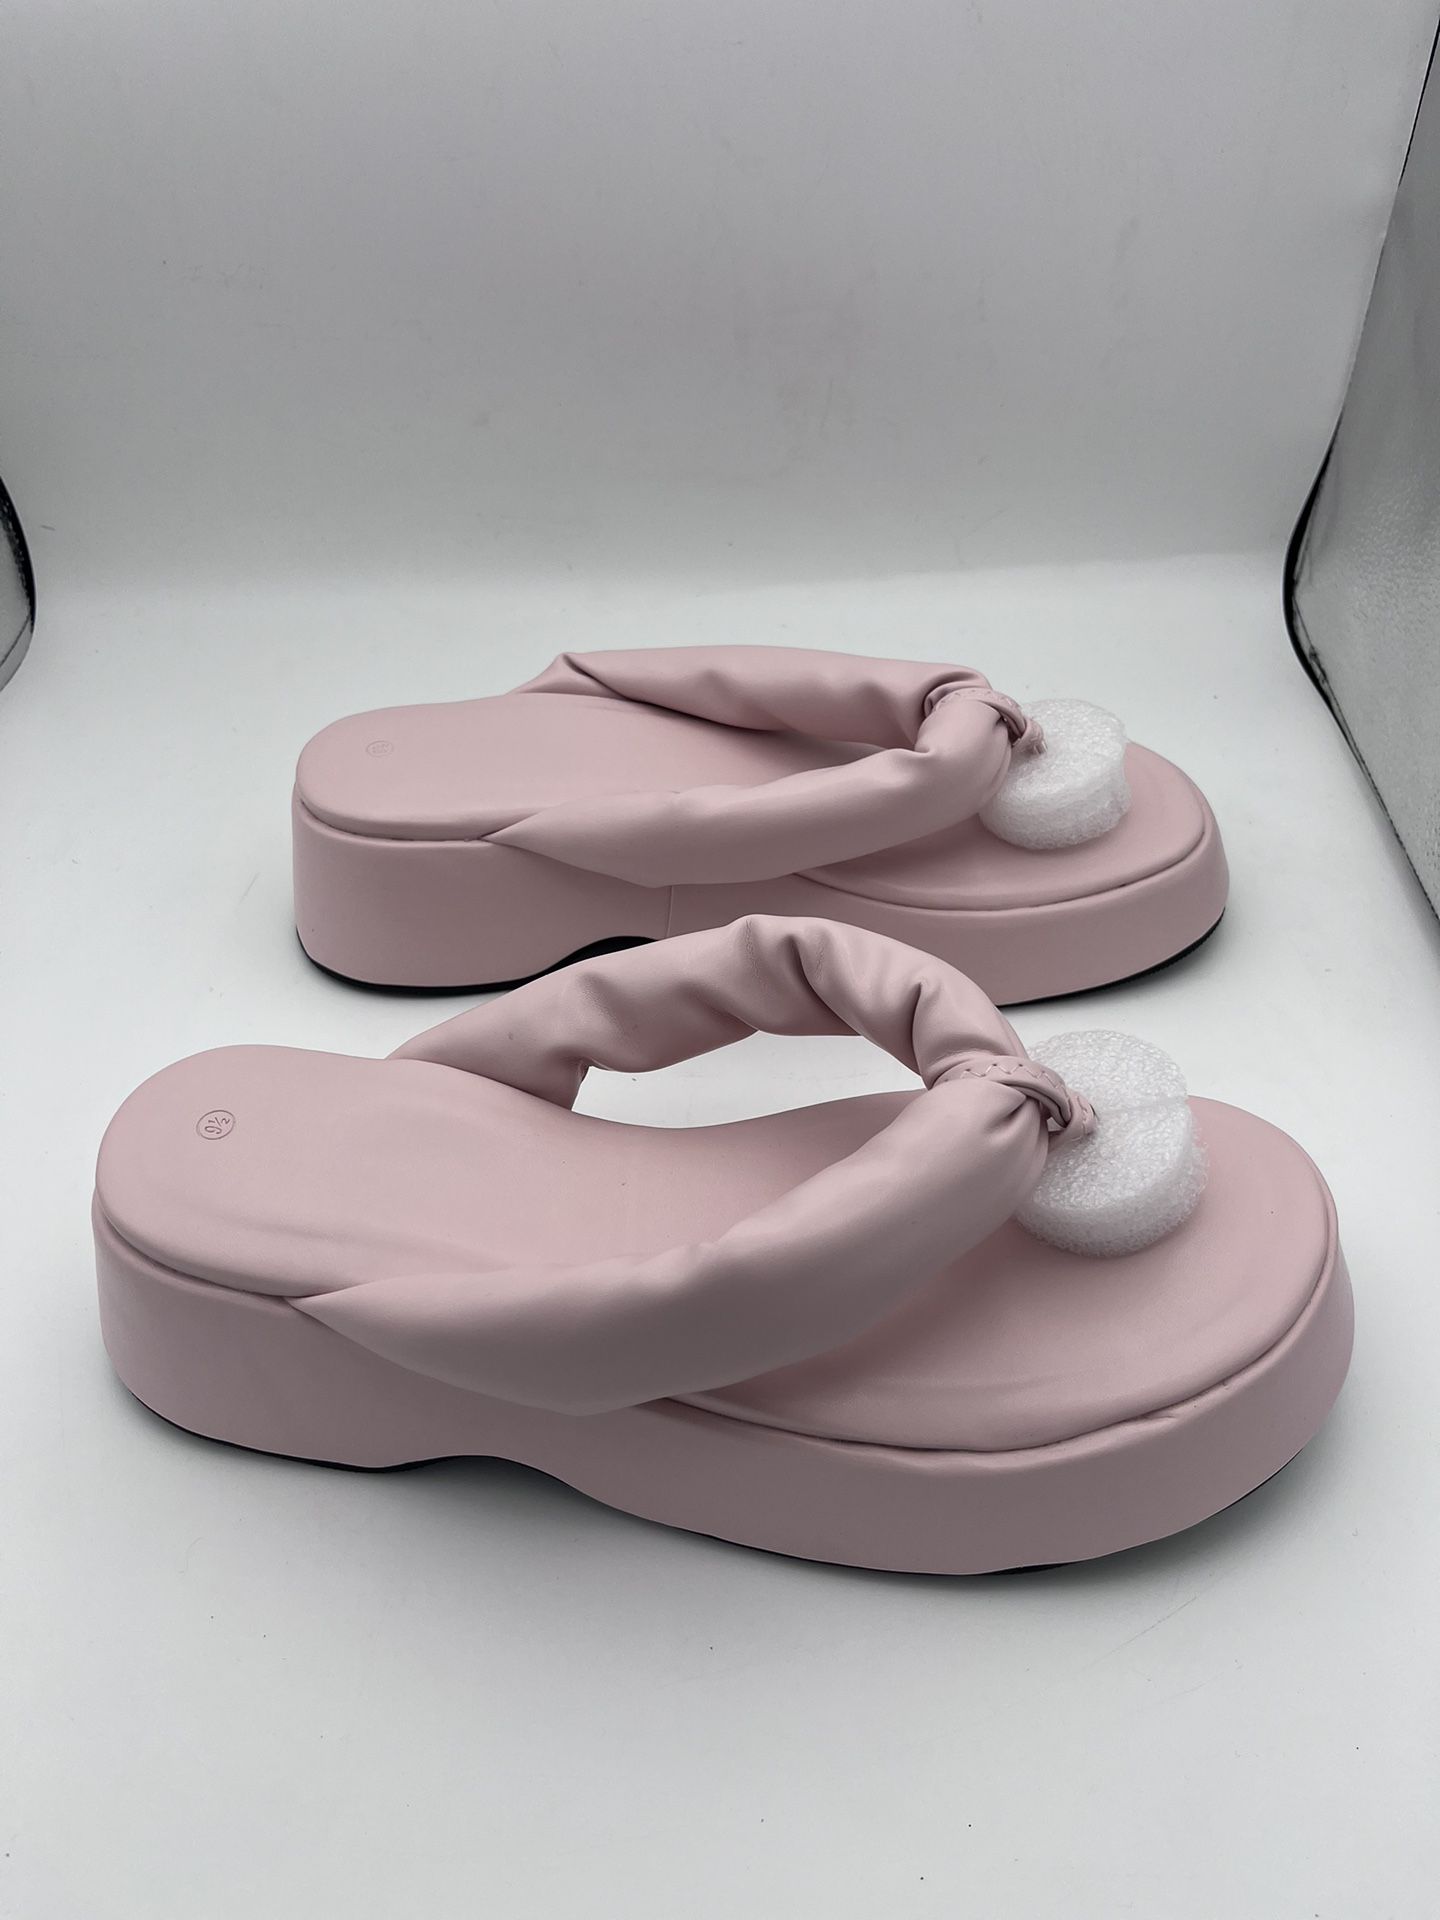 Women’s Platform Wedge Sandals Toe Thong Flip-Flops Slippers Pink Size 9.5